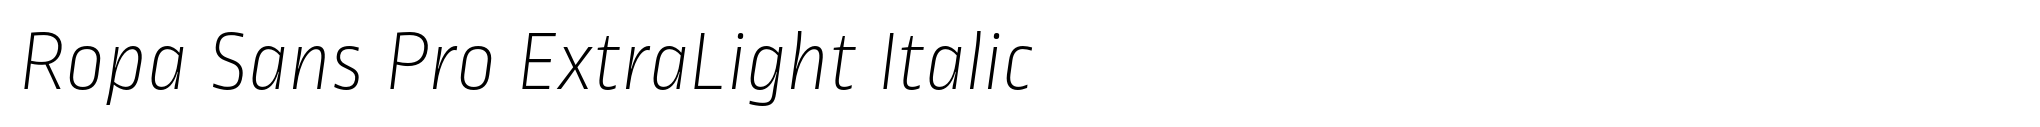 Ropa Sans Pro ExtraLight Italic image